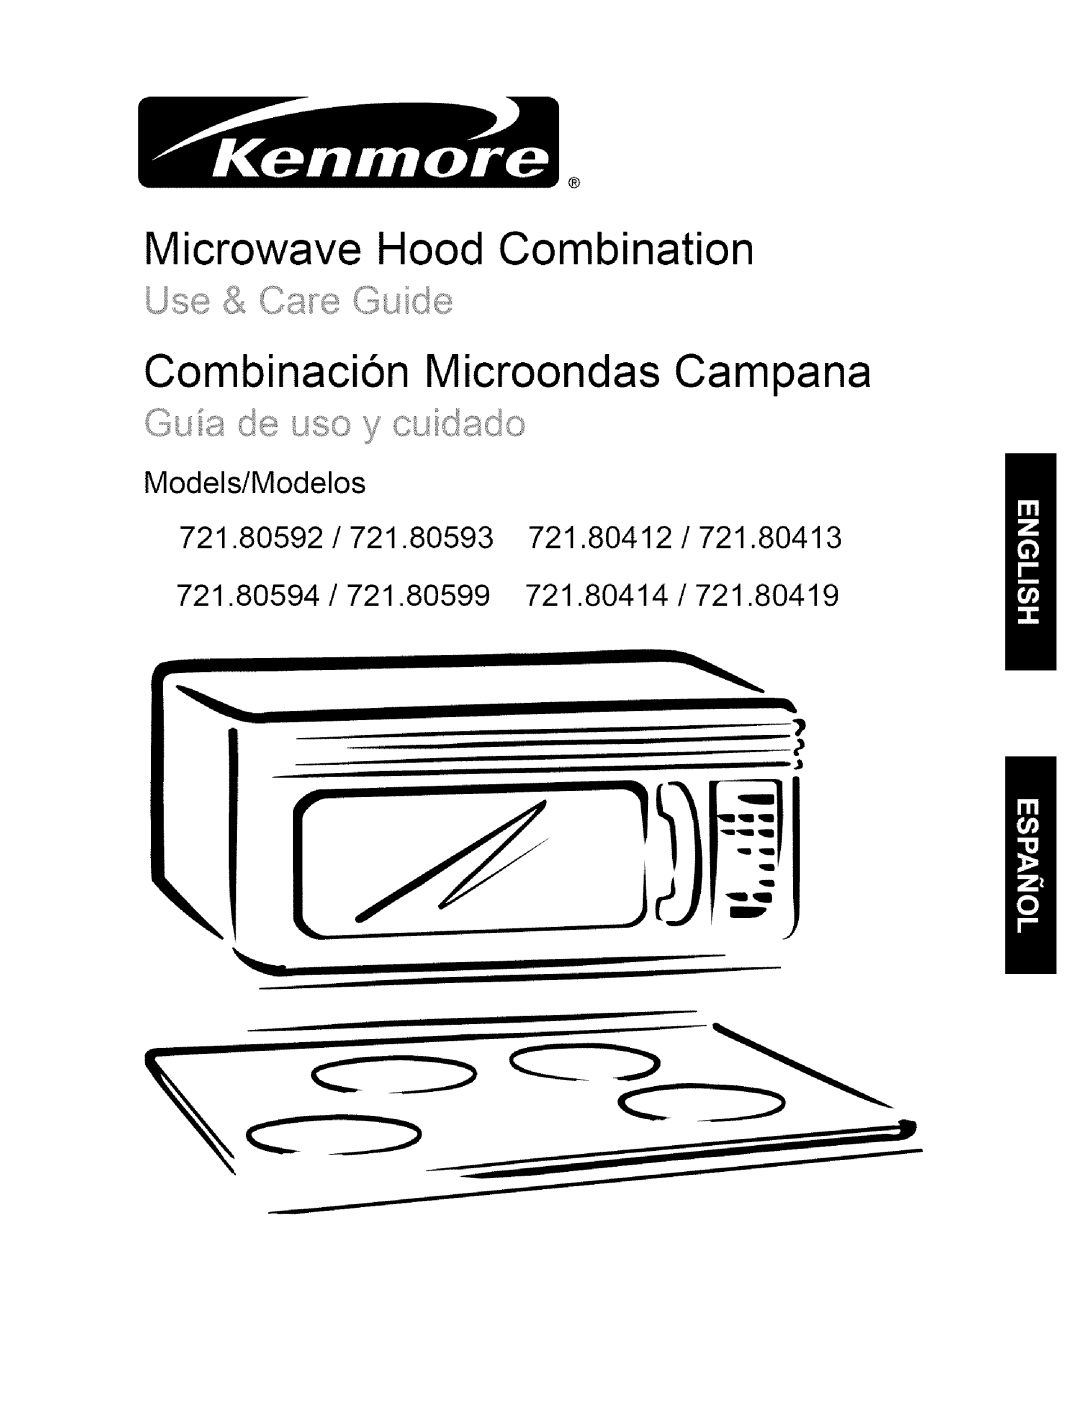 Kenmore 721.80594 manual Models/Modelos 721.80592 / 721.80593, Microwave Hood Combination, CombinaciSn Microondas Campana 